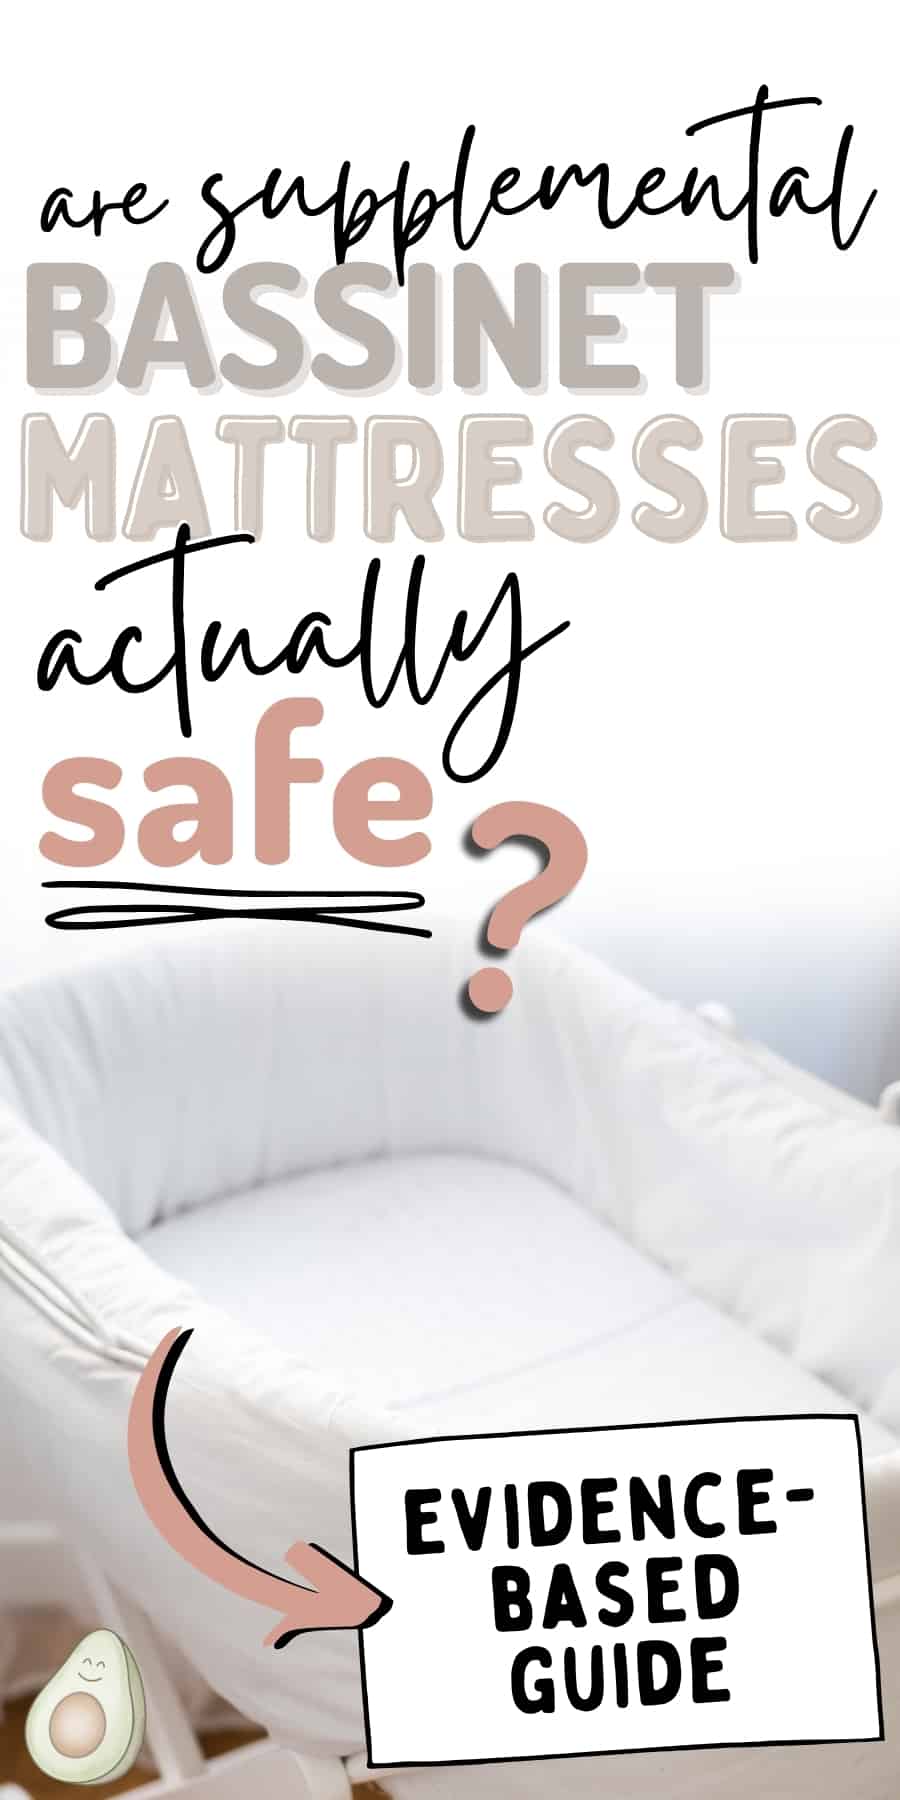 bassinet mattress safety